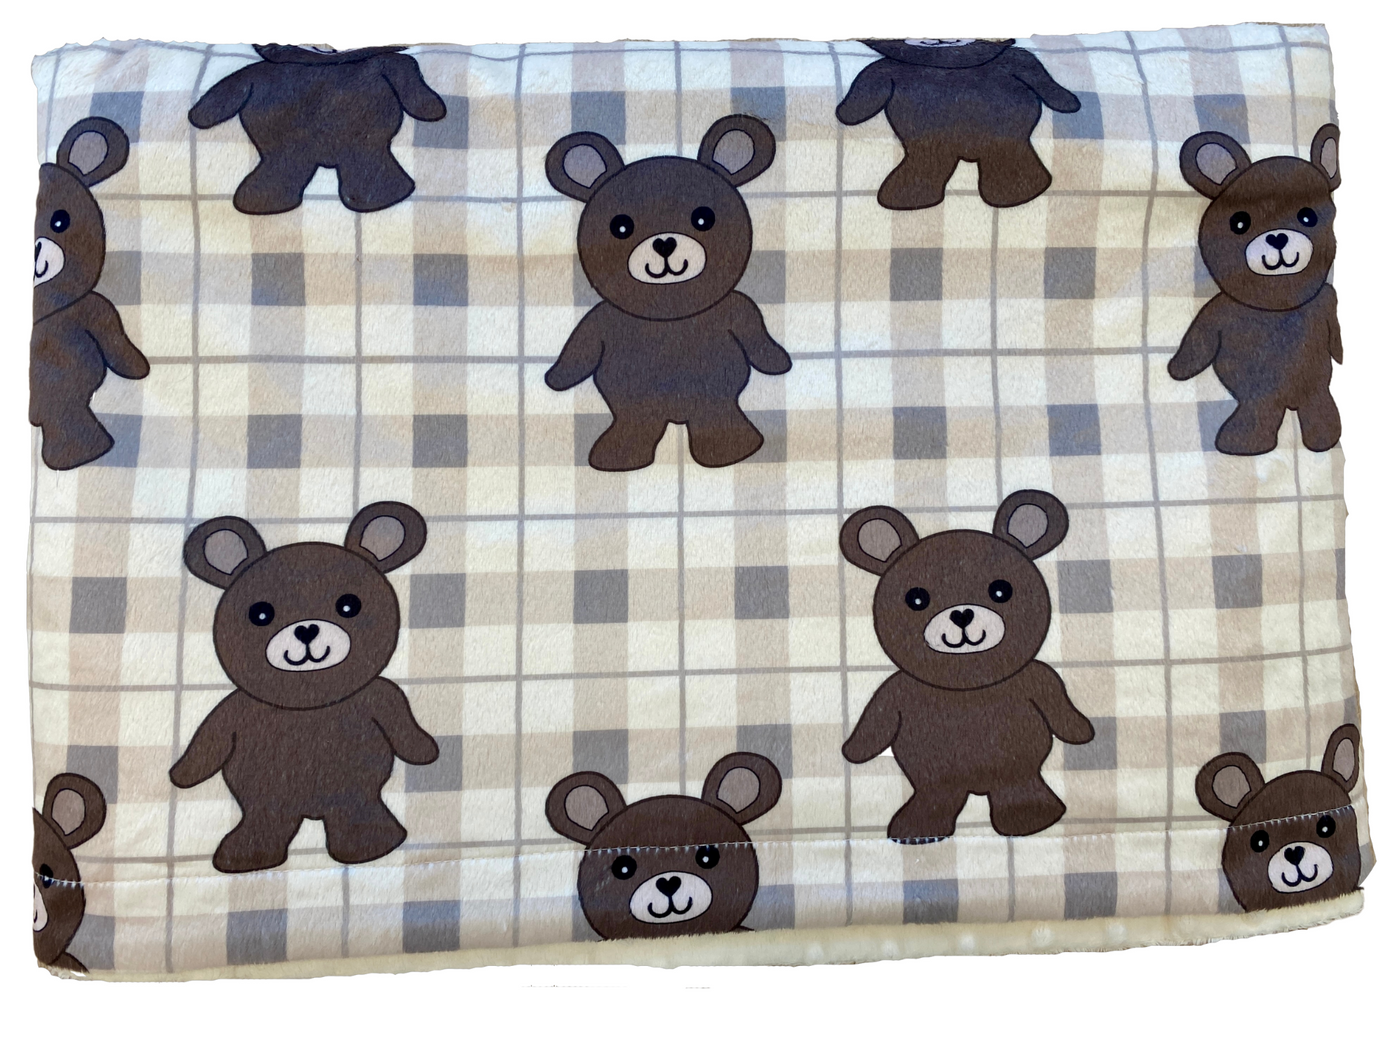 Giant blanket: Plaid Cute Bears